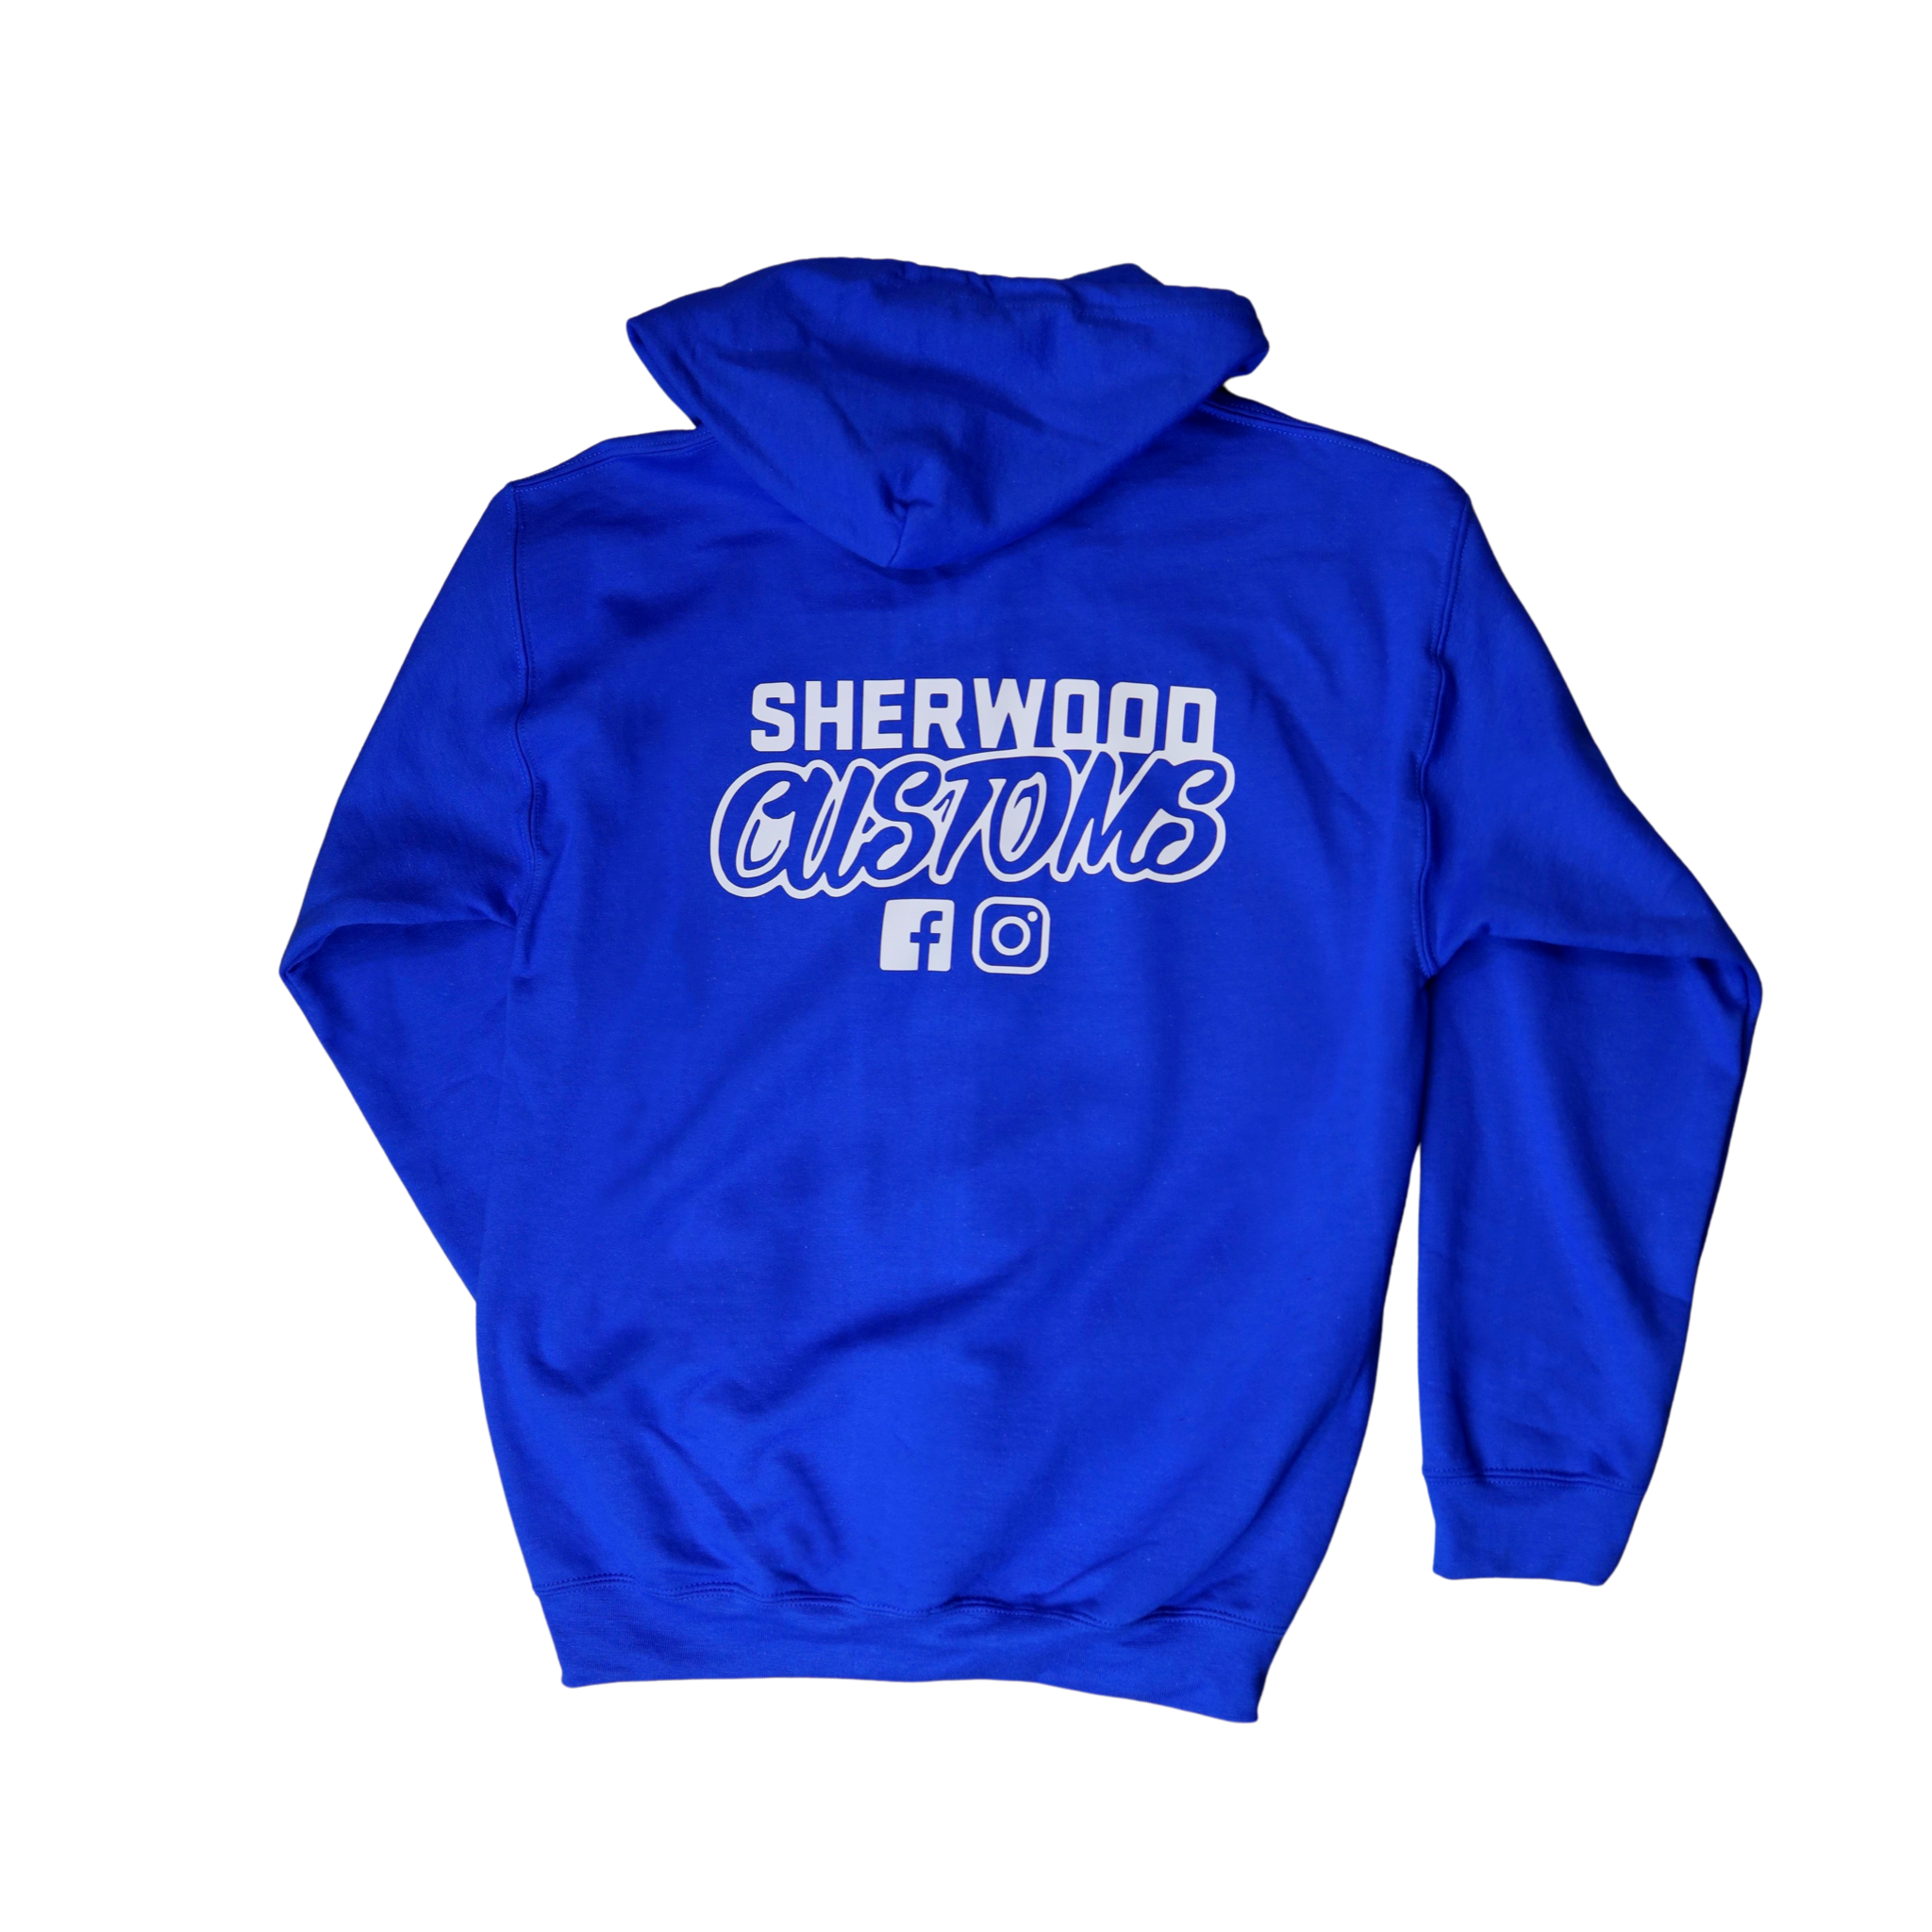 Sherwood Customs Royal Blue with White Logo Zip Hoodie